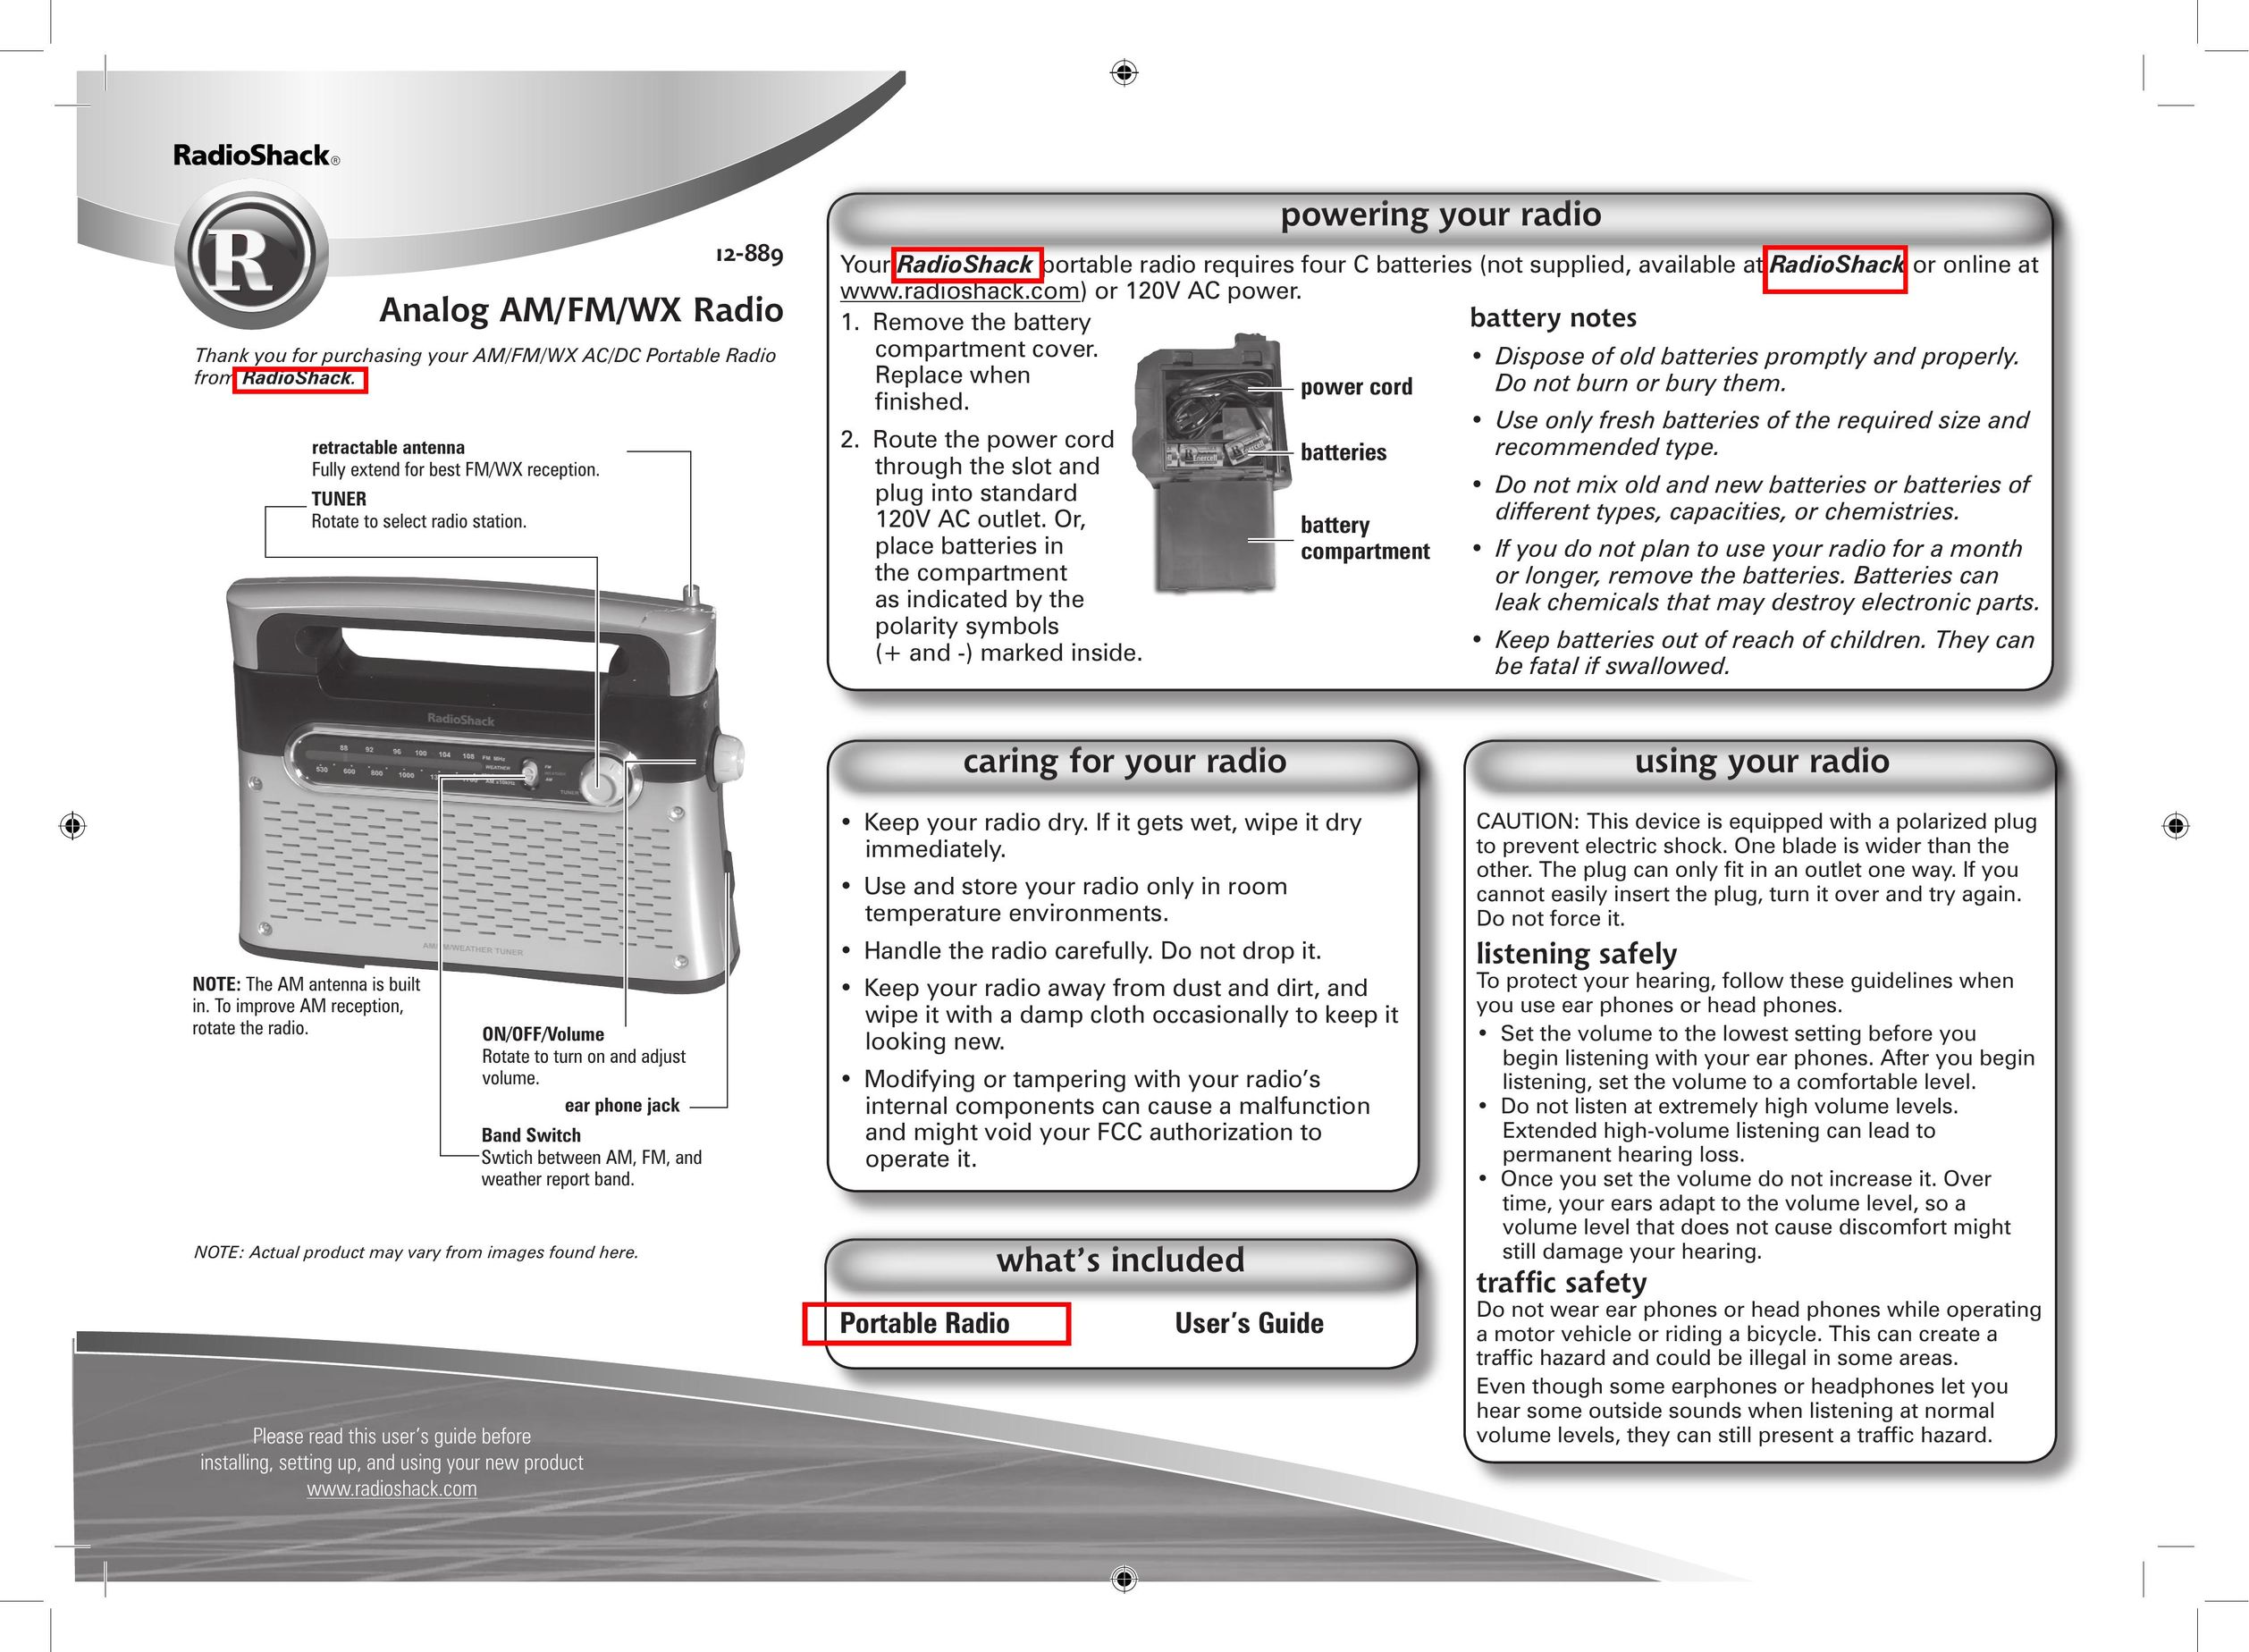 Radio Shack 12-889 Portable Radio User Manual